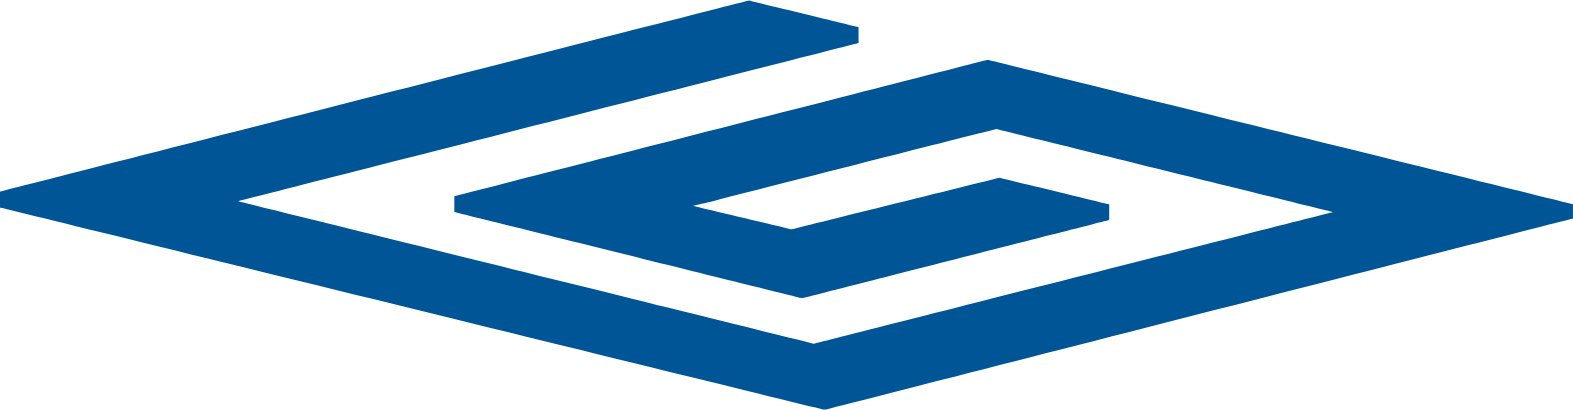 Gladstone Commercial logo (transparent PNG)